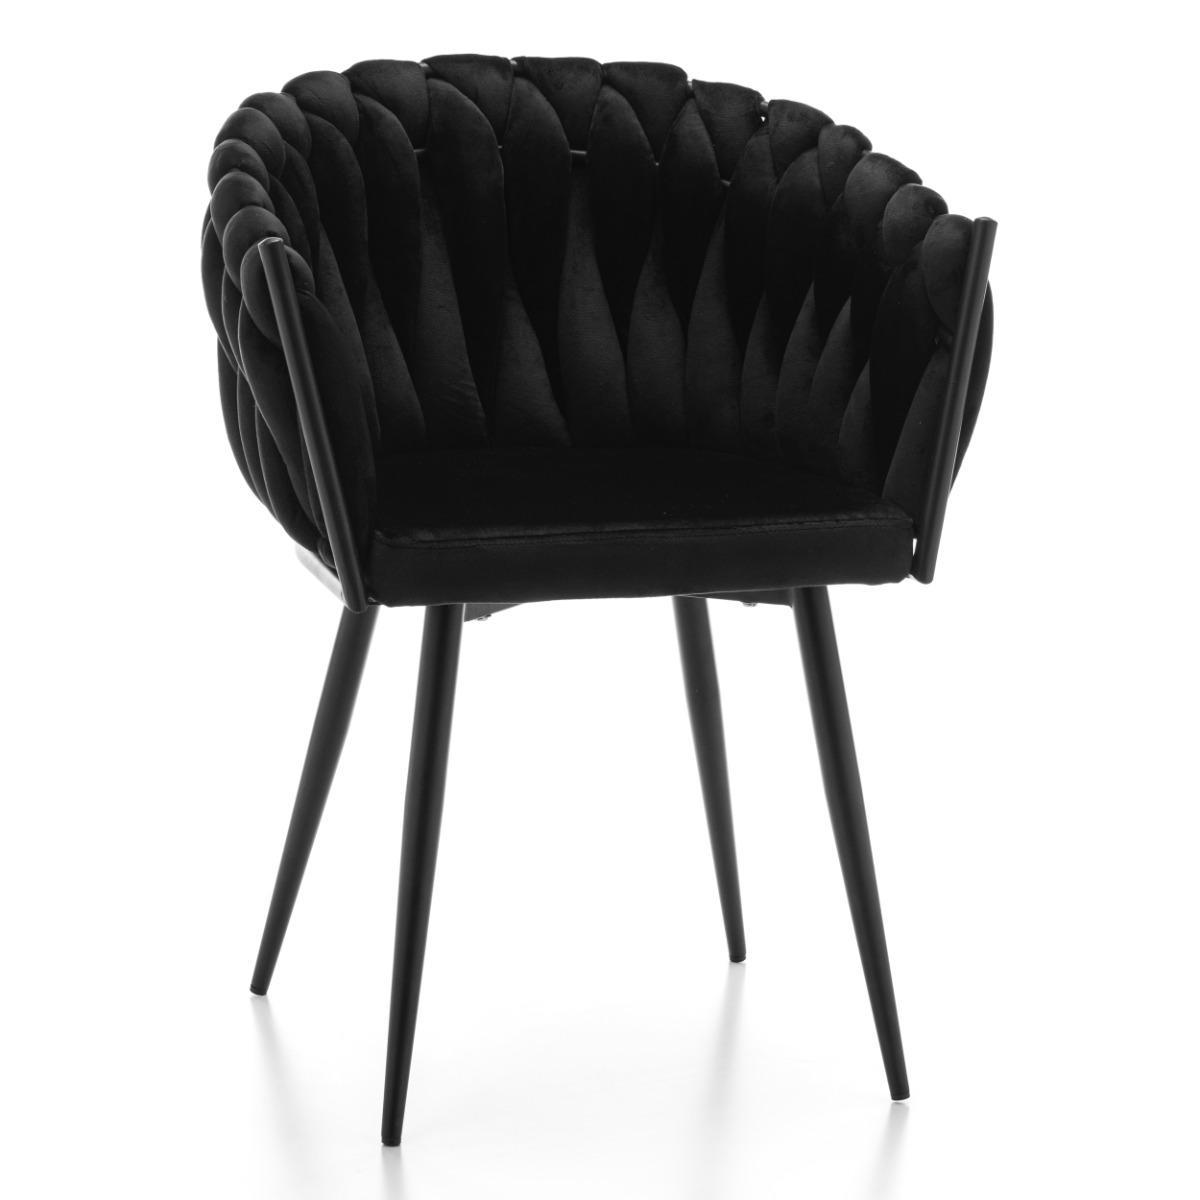 Krzesło LATINA czarne welurowe glamour do jadalni lub salonu 0 Full Screen